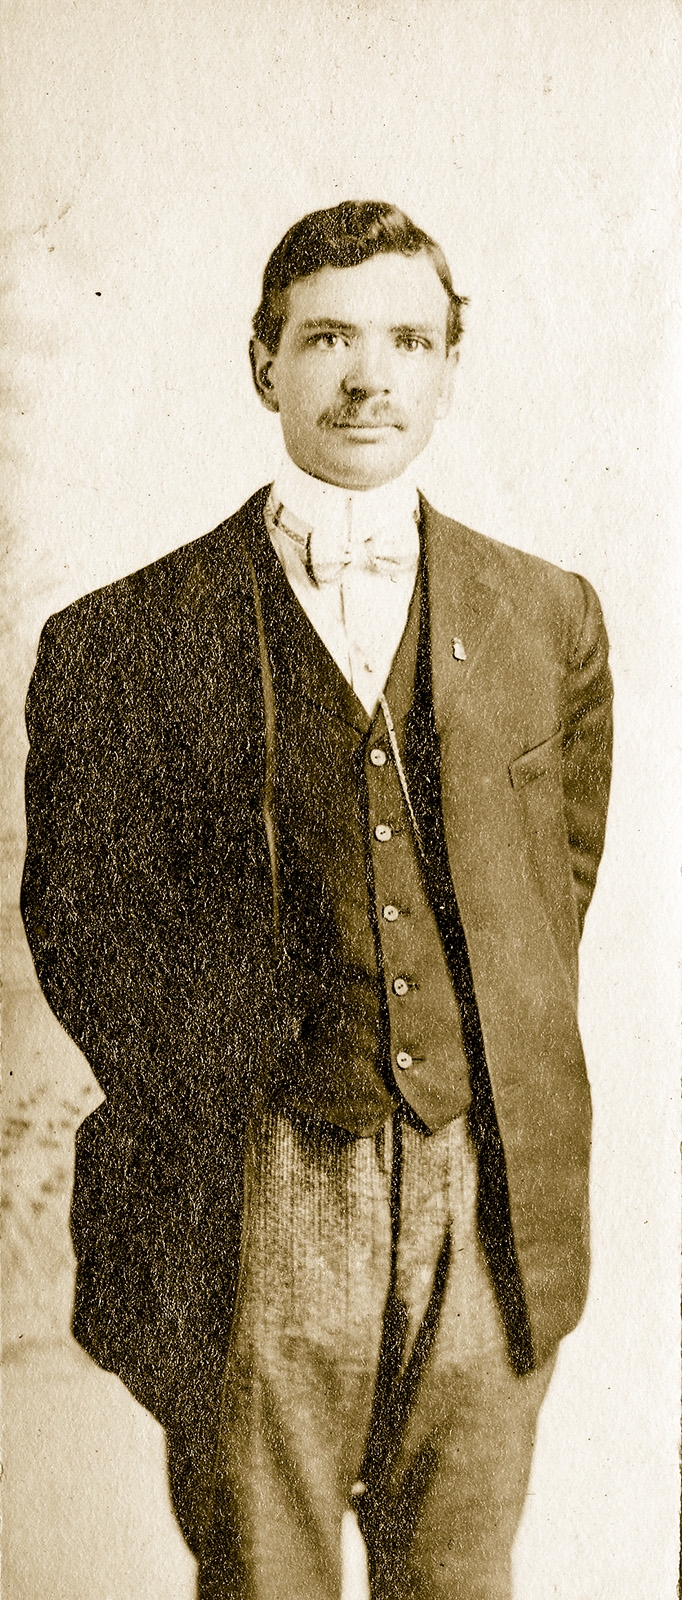 Ira Willis - August 24, 1906